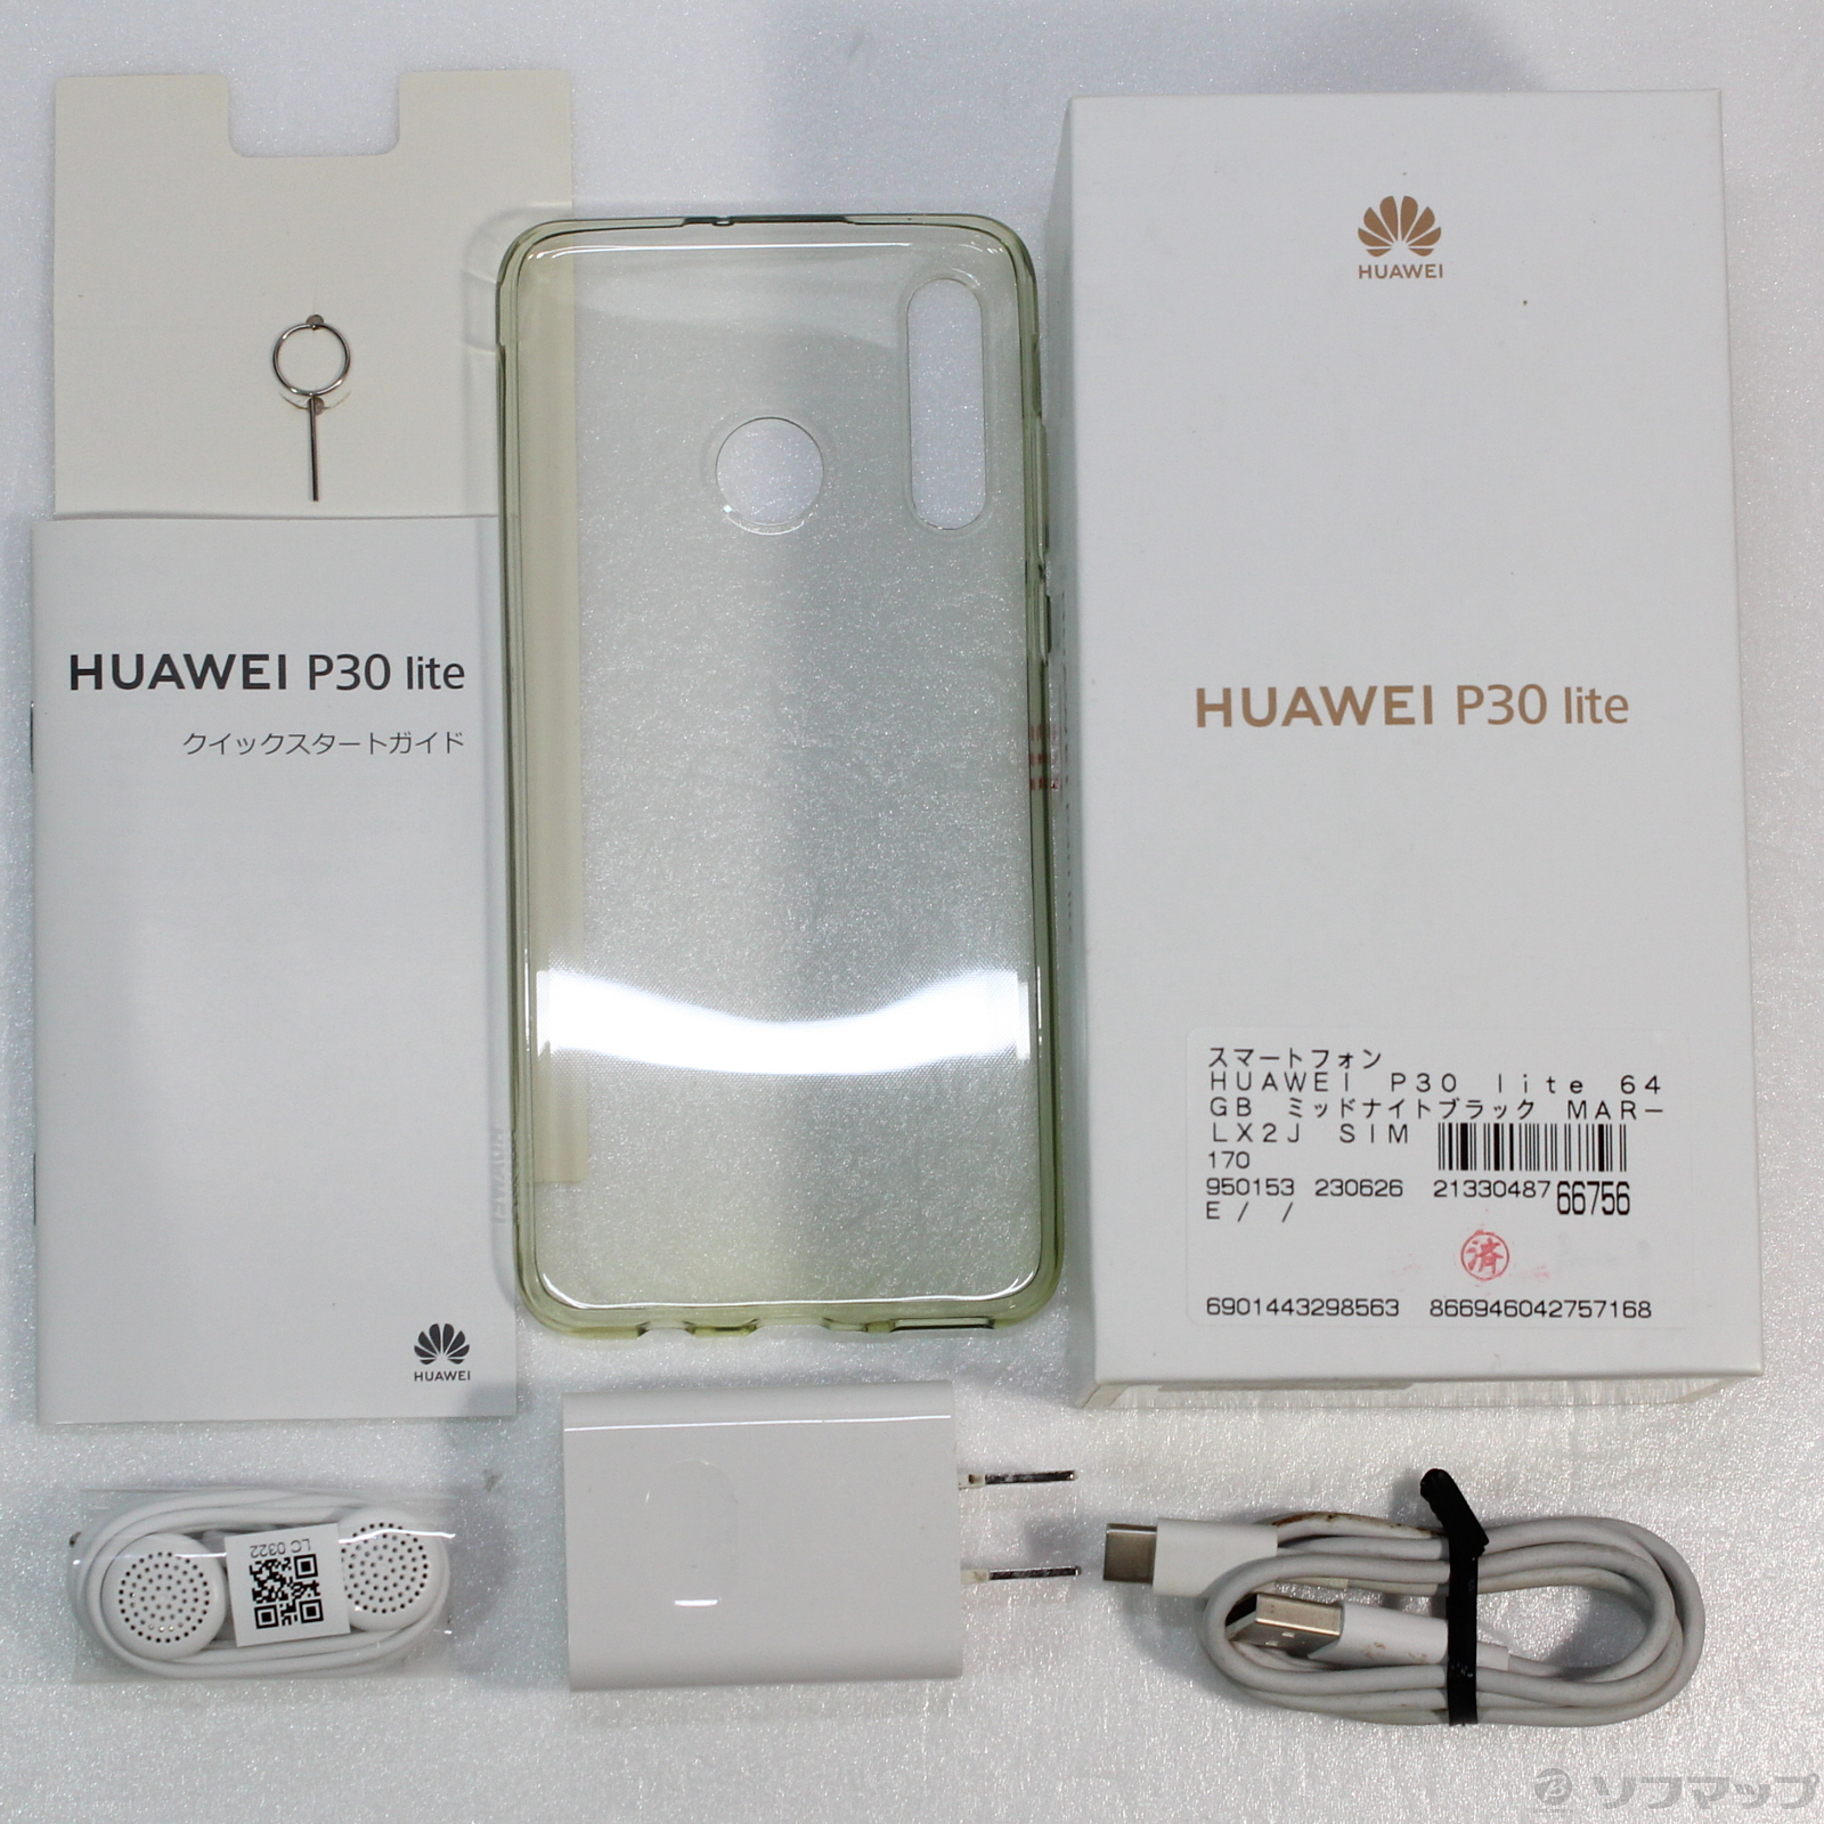 HUAWEI P30 lite ミッドナイトブラック 64 GB - スマートフォン本体